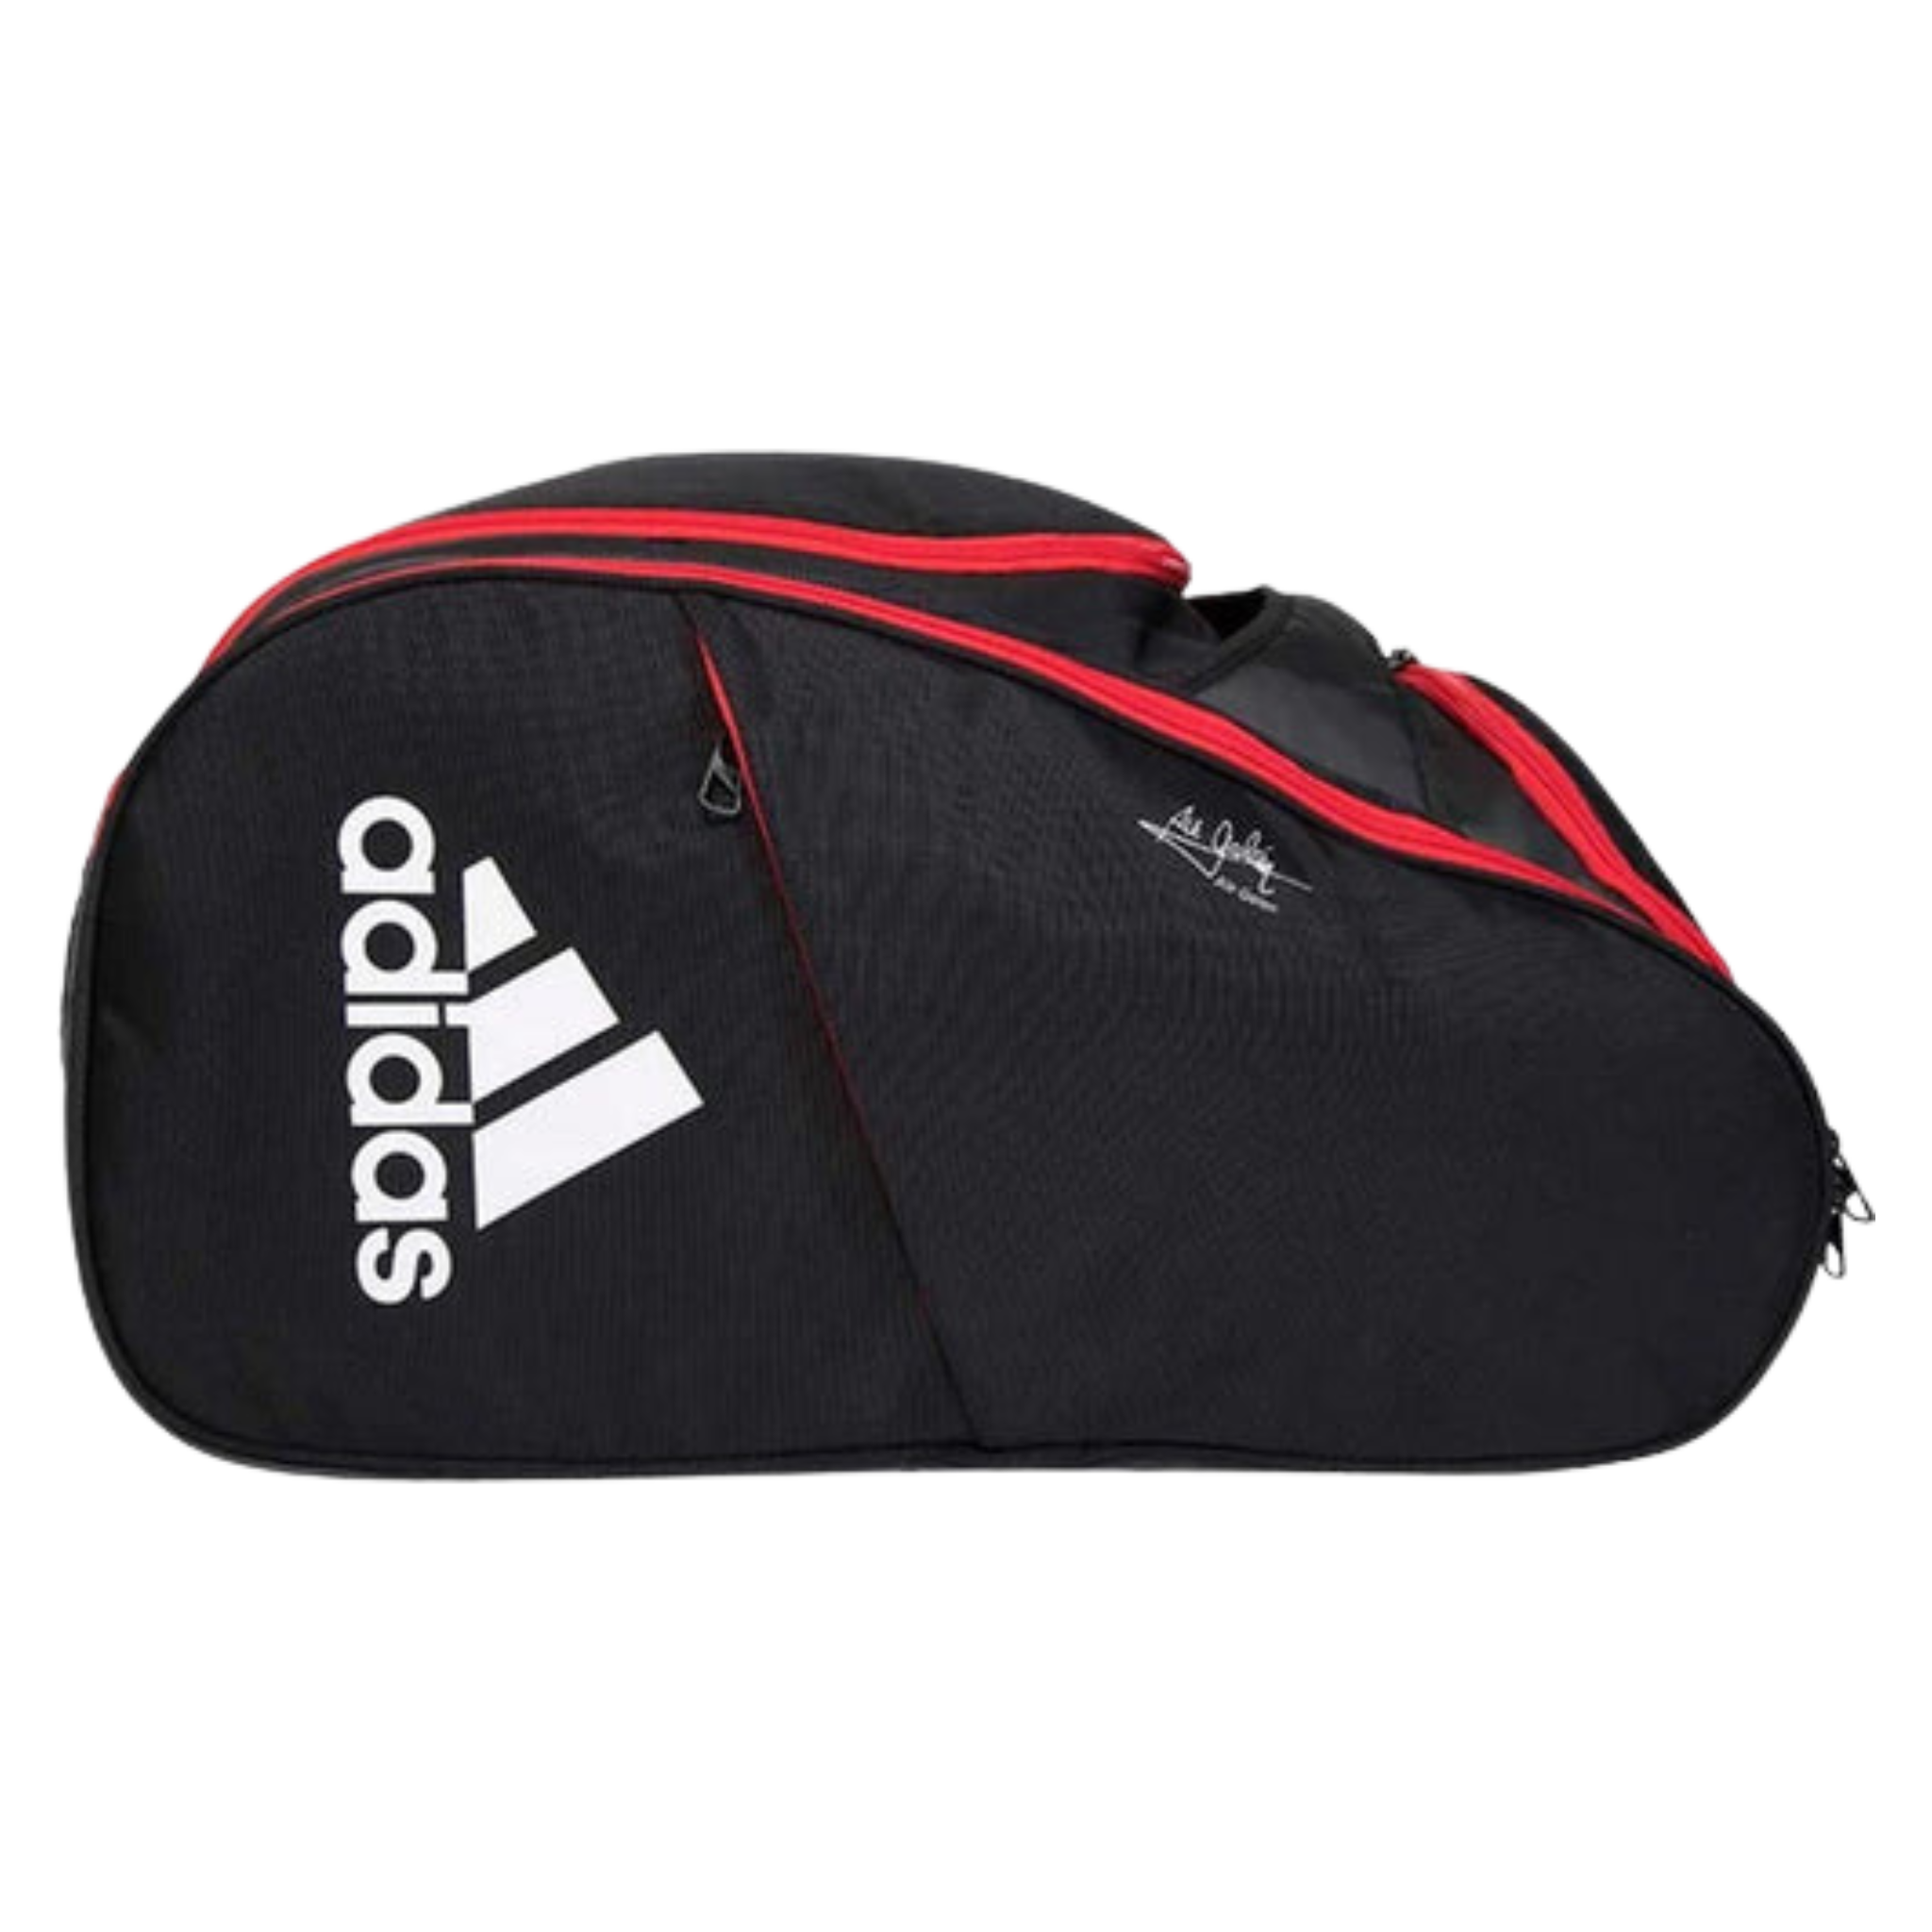 Adidas Racket Bag Multi game - Black/Red - Padel Life